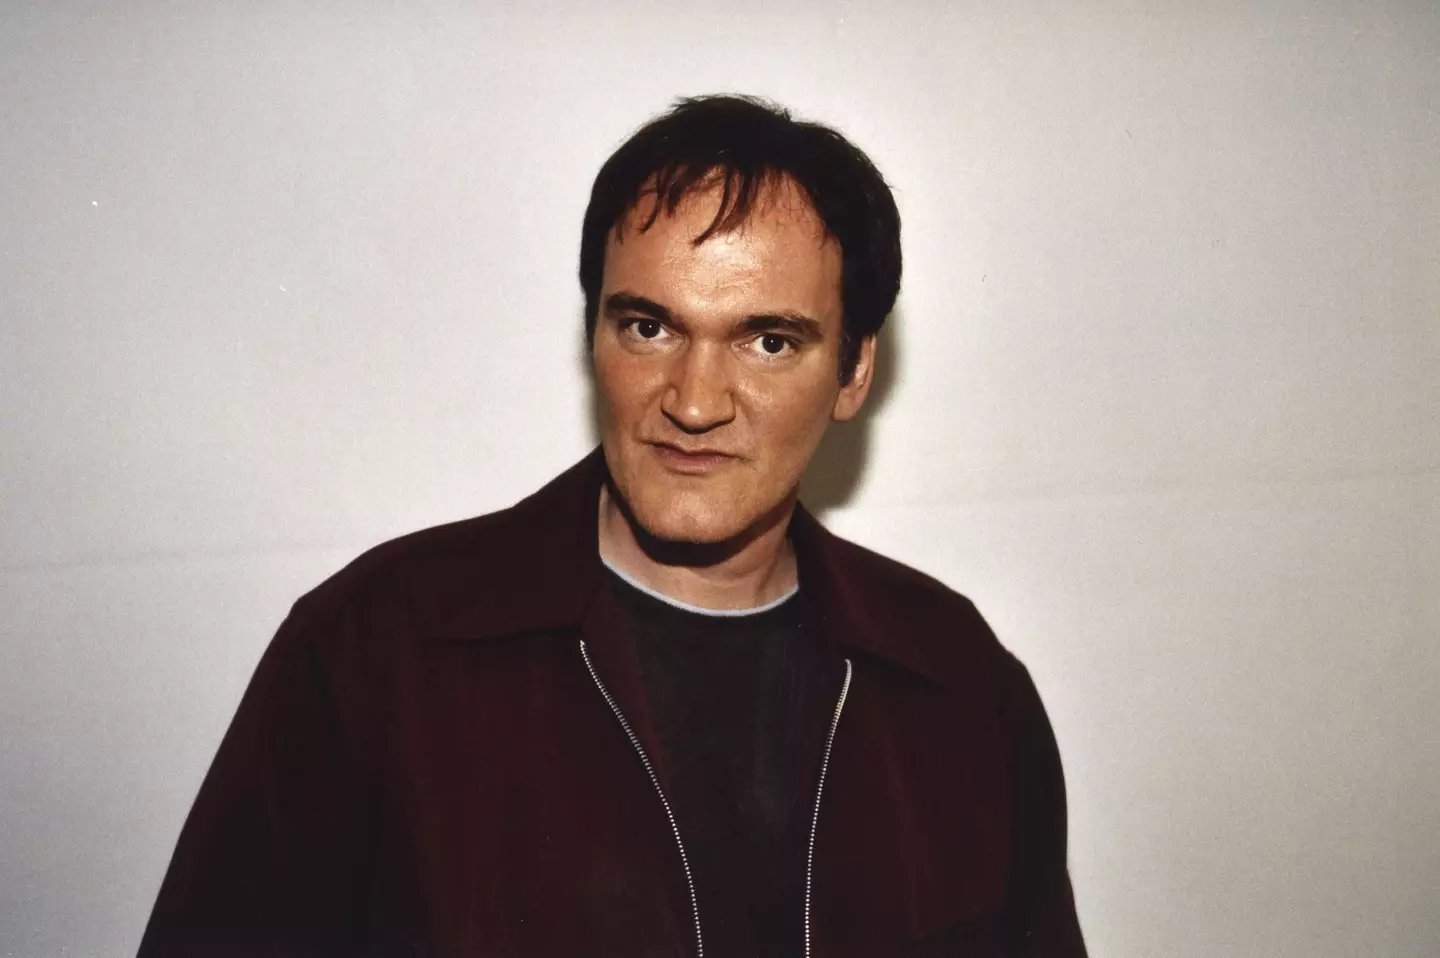 Tarantino has blasted the Deadpool actor.